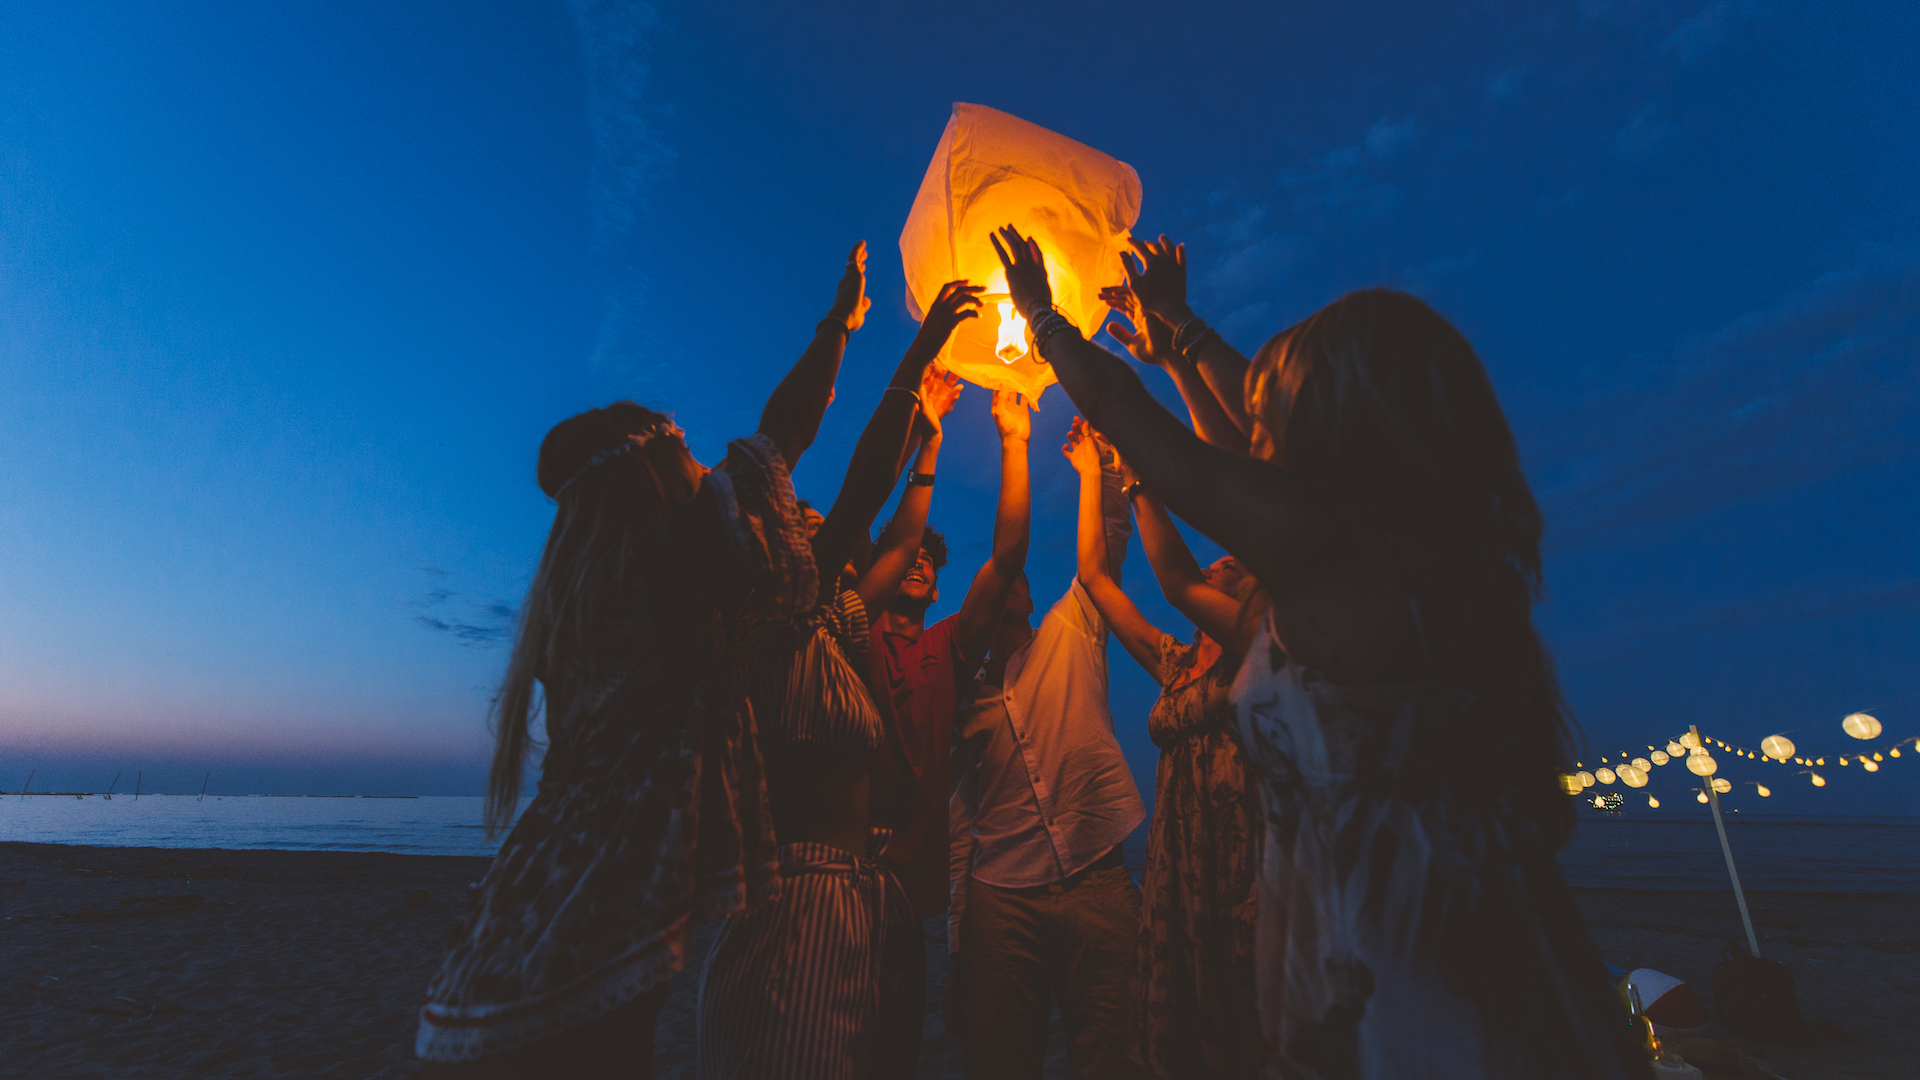 A group of girls lighting a lantern on a beach